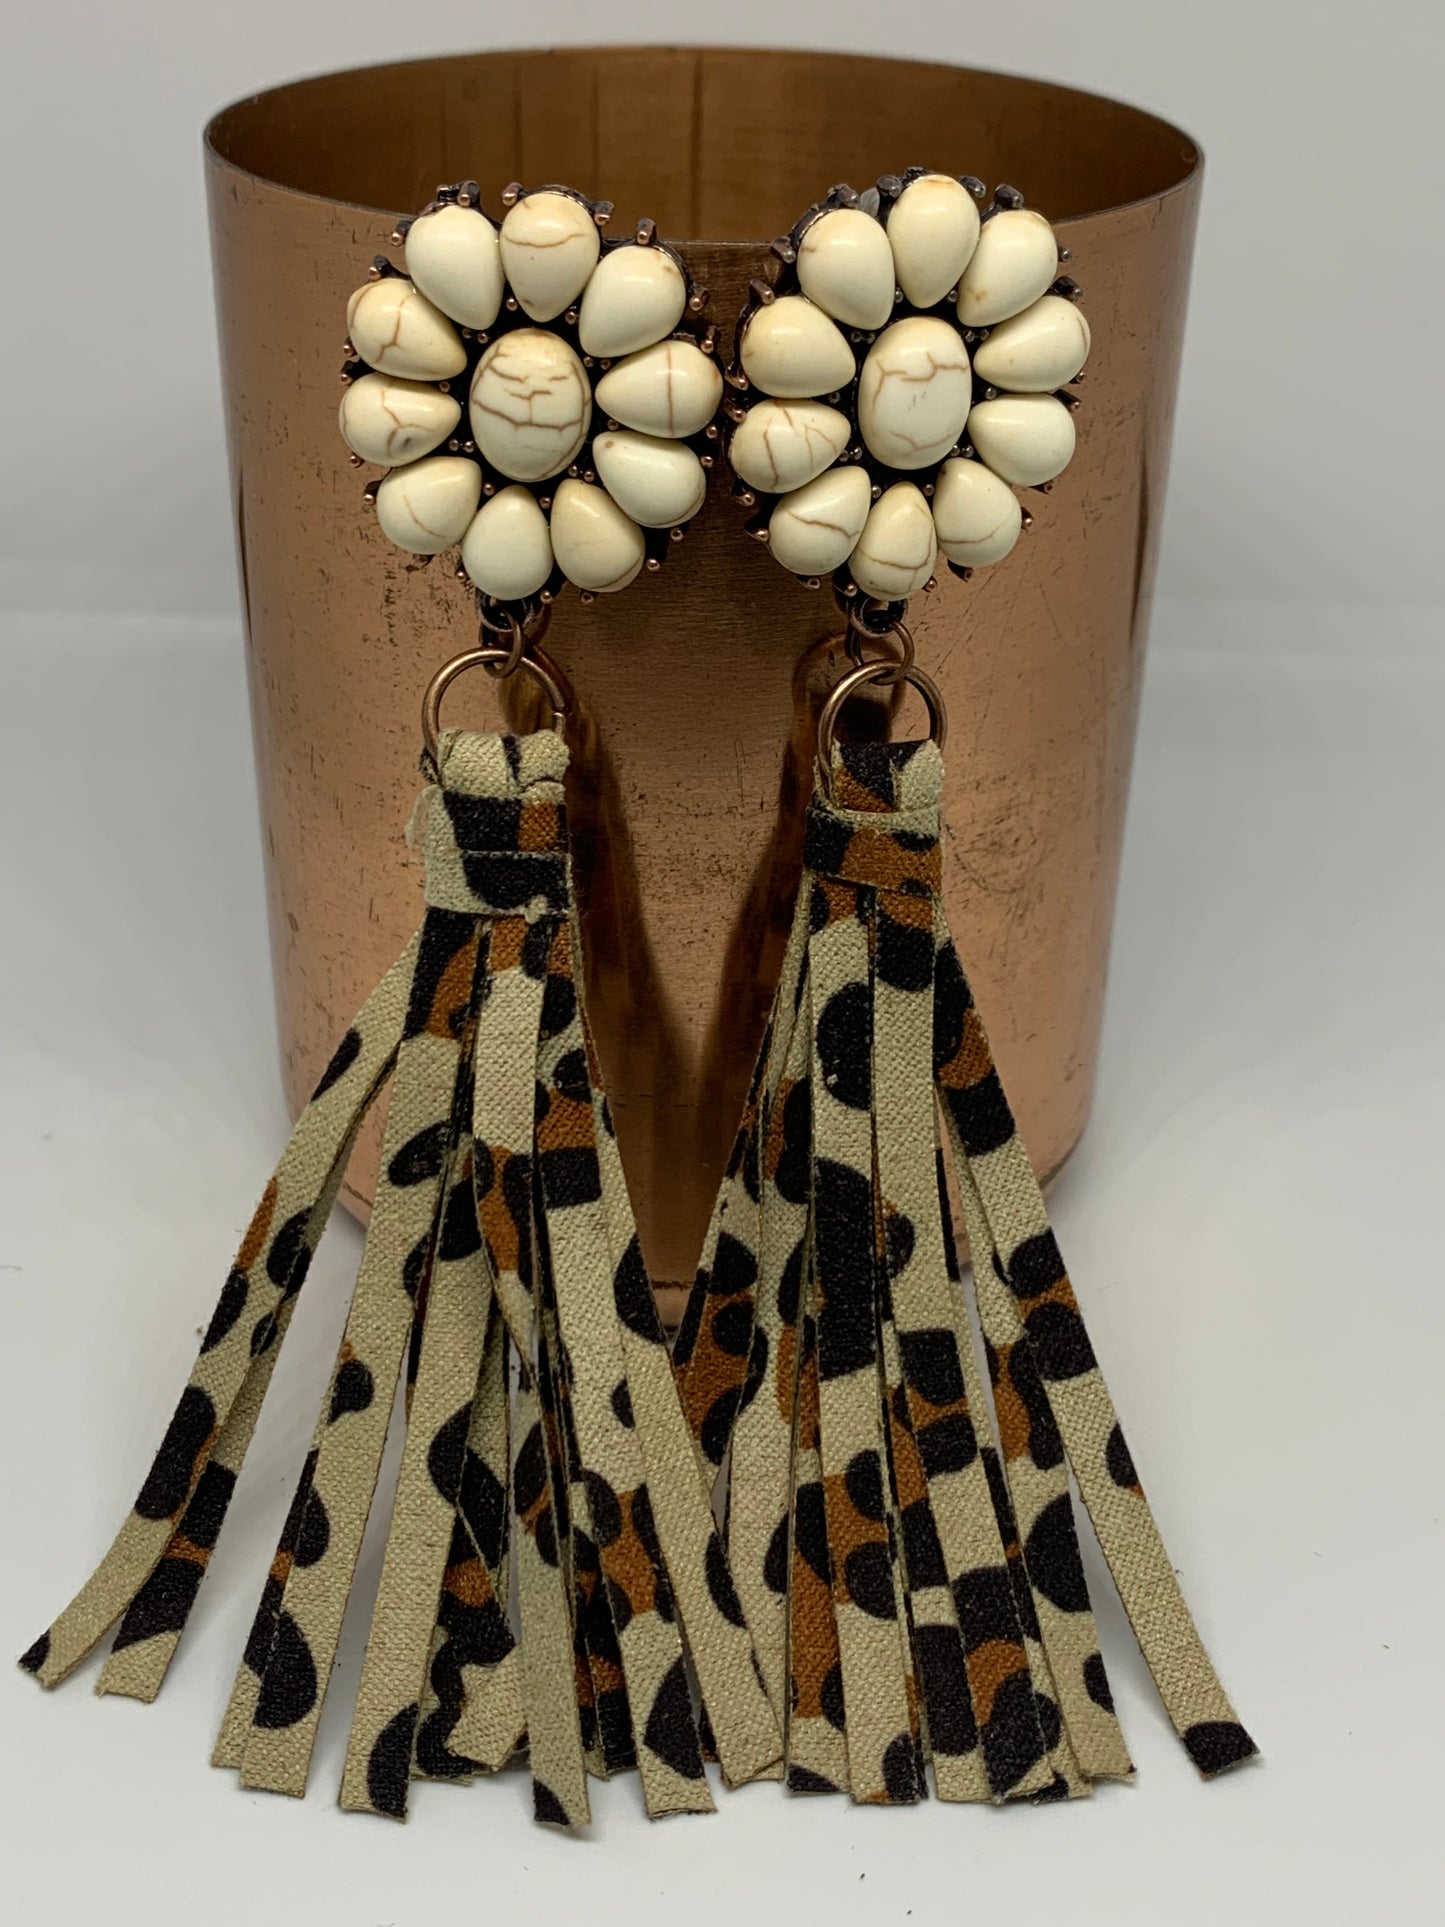 Leopard Fringe Inlaid Turquoise Earrings